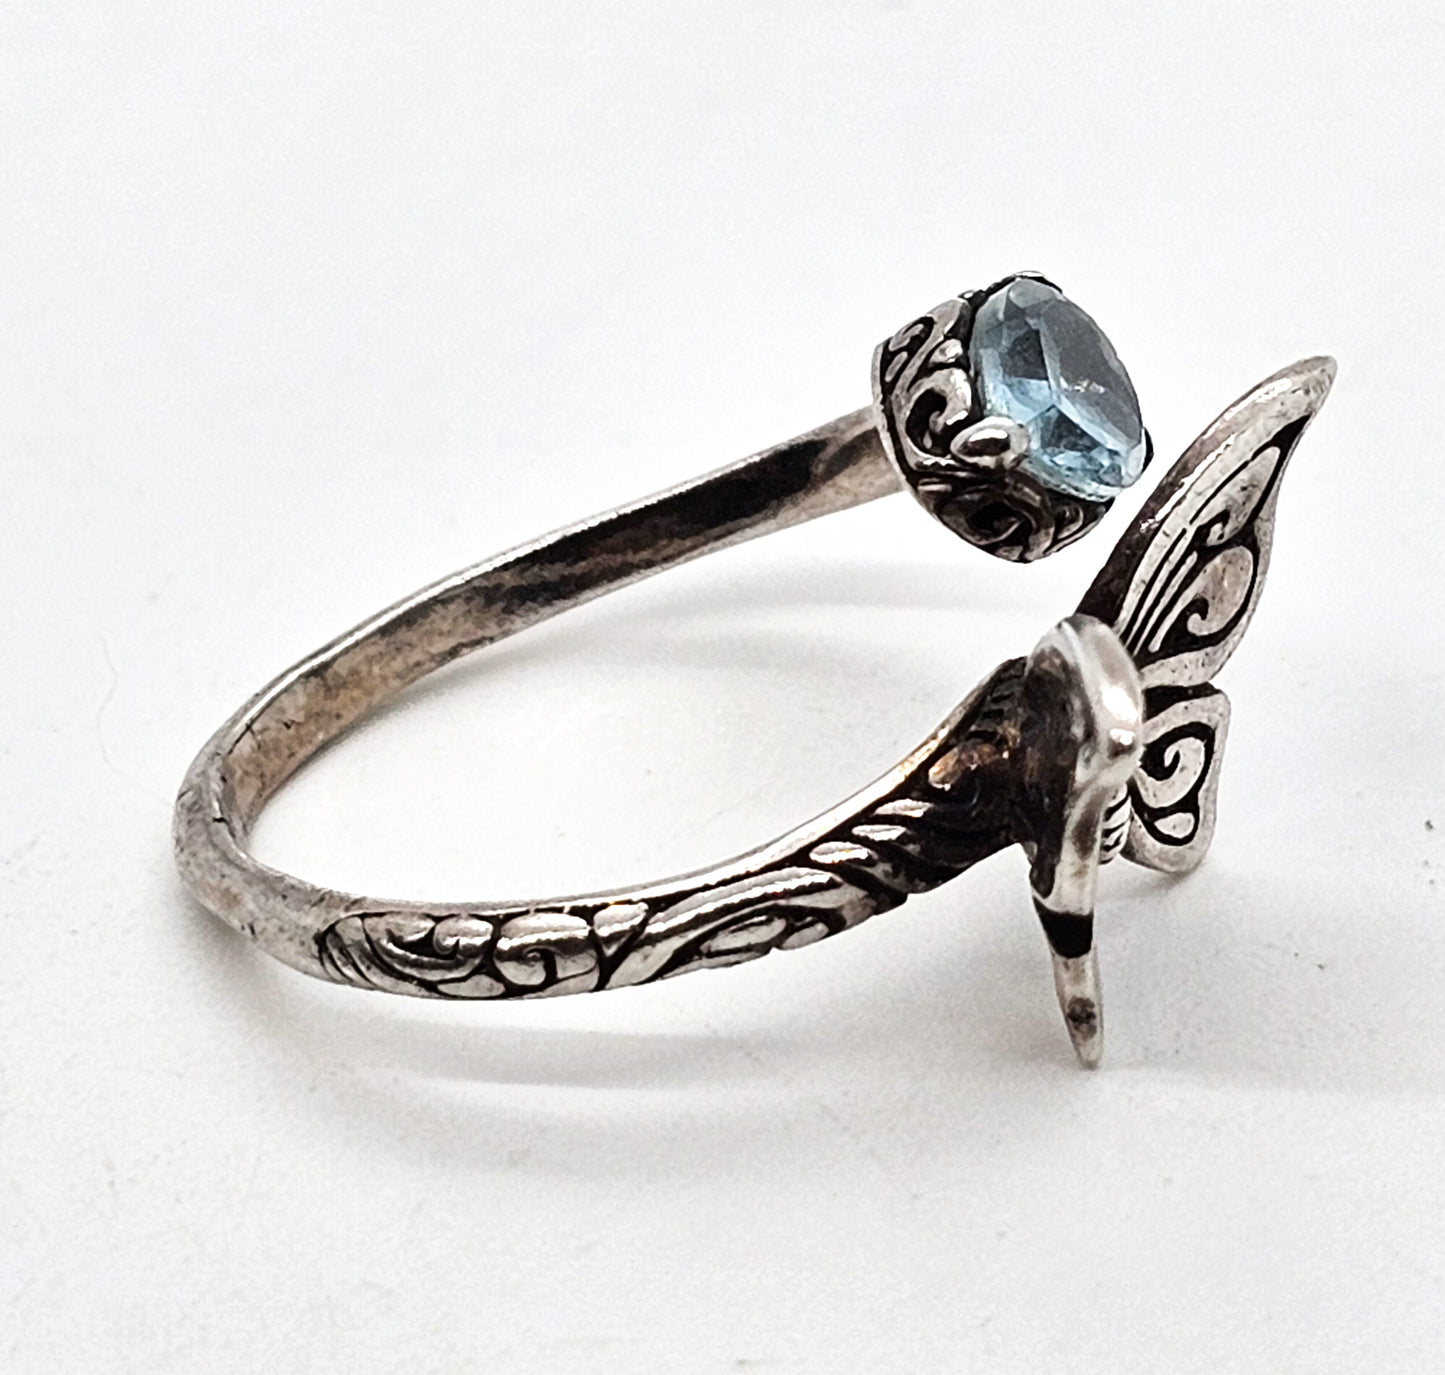 Annika Witt ATI blue topaz sterling silver embossed torsade spiral ring size 8